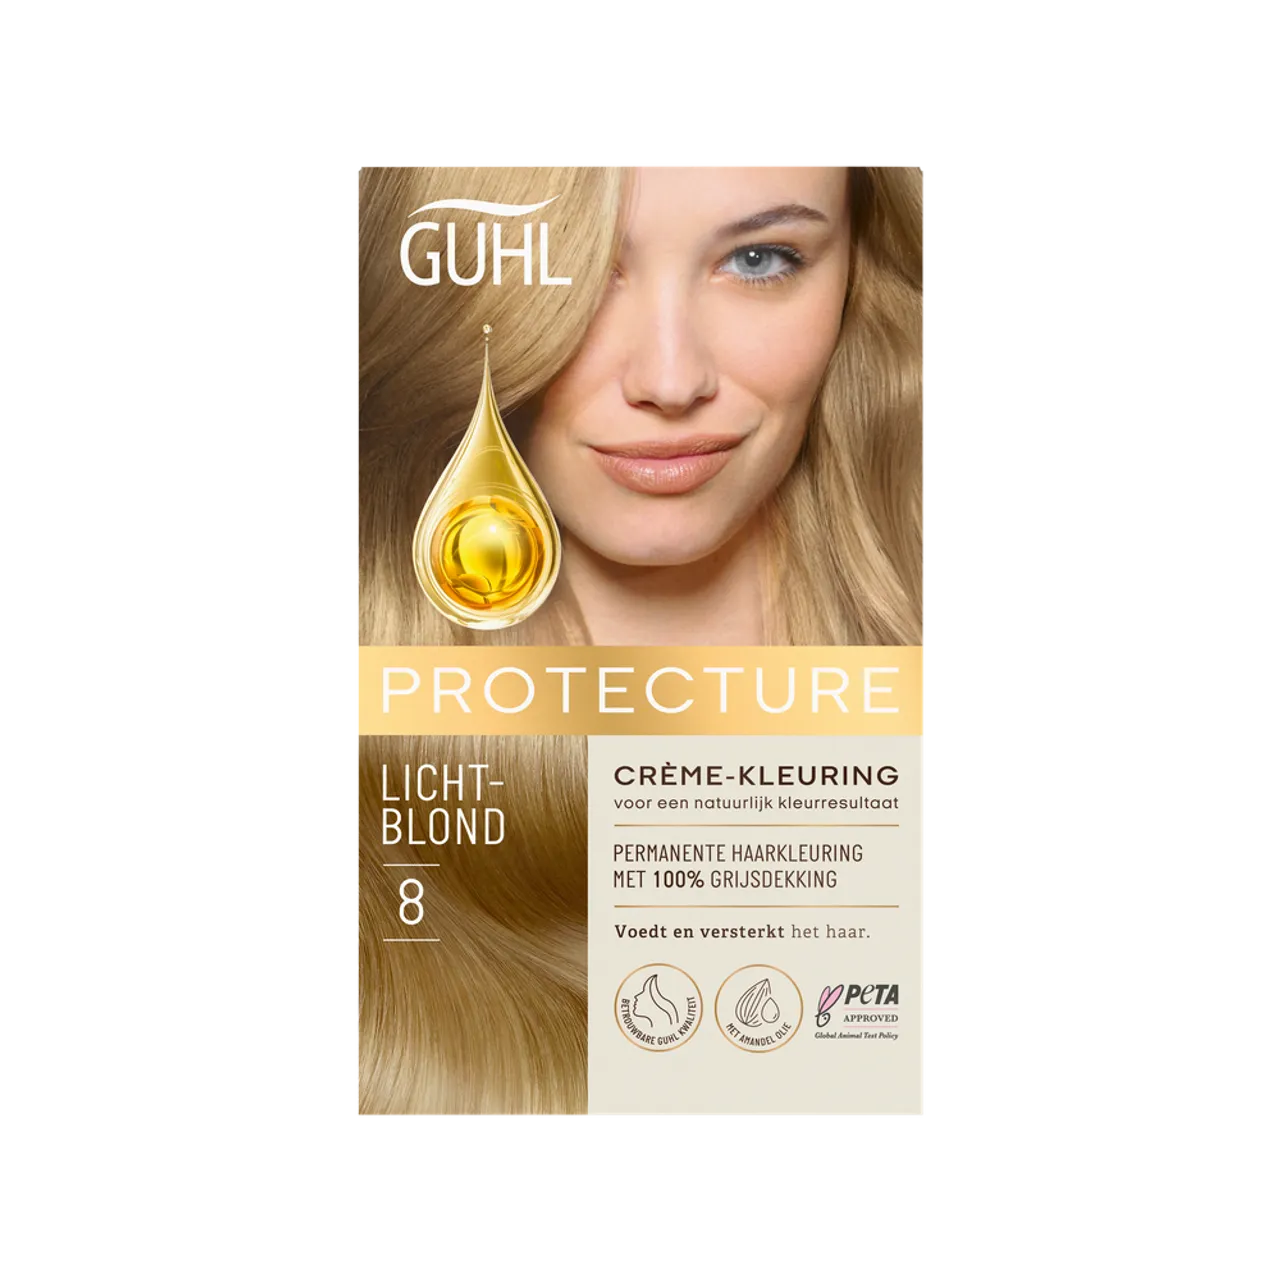 Guhl Protecture Crème-Kleuring 8 Lichtblond